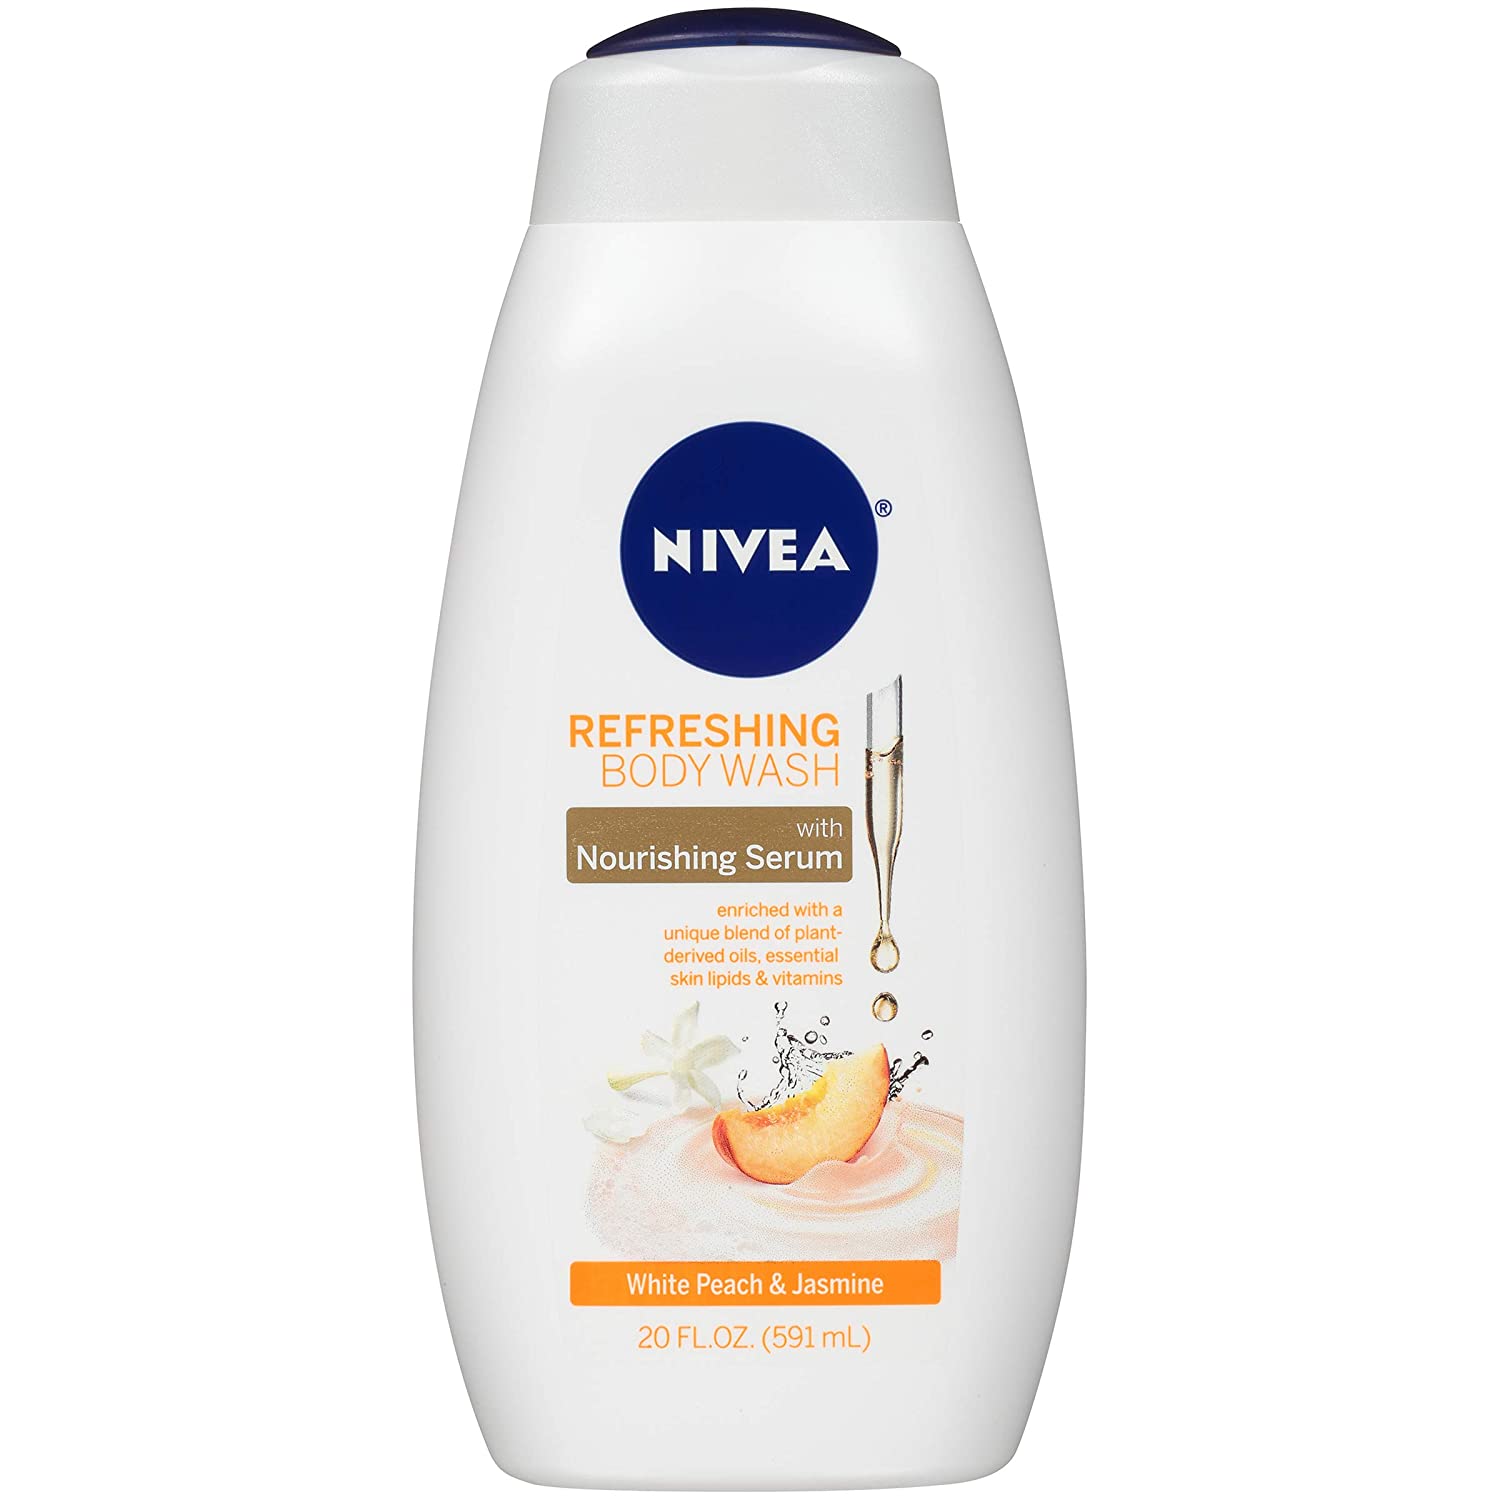 NIVEA Refreshing Nourishing Serum Body Wash